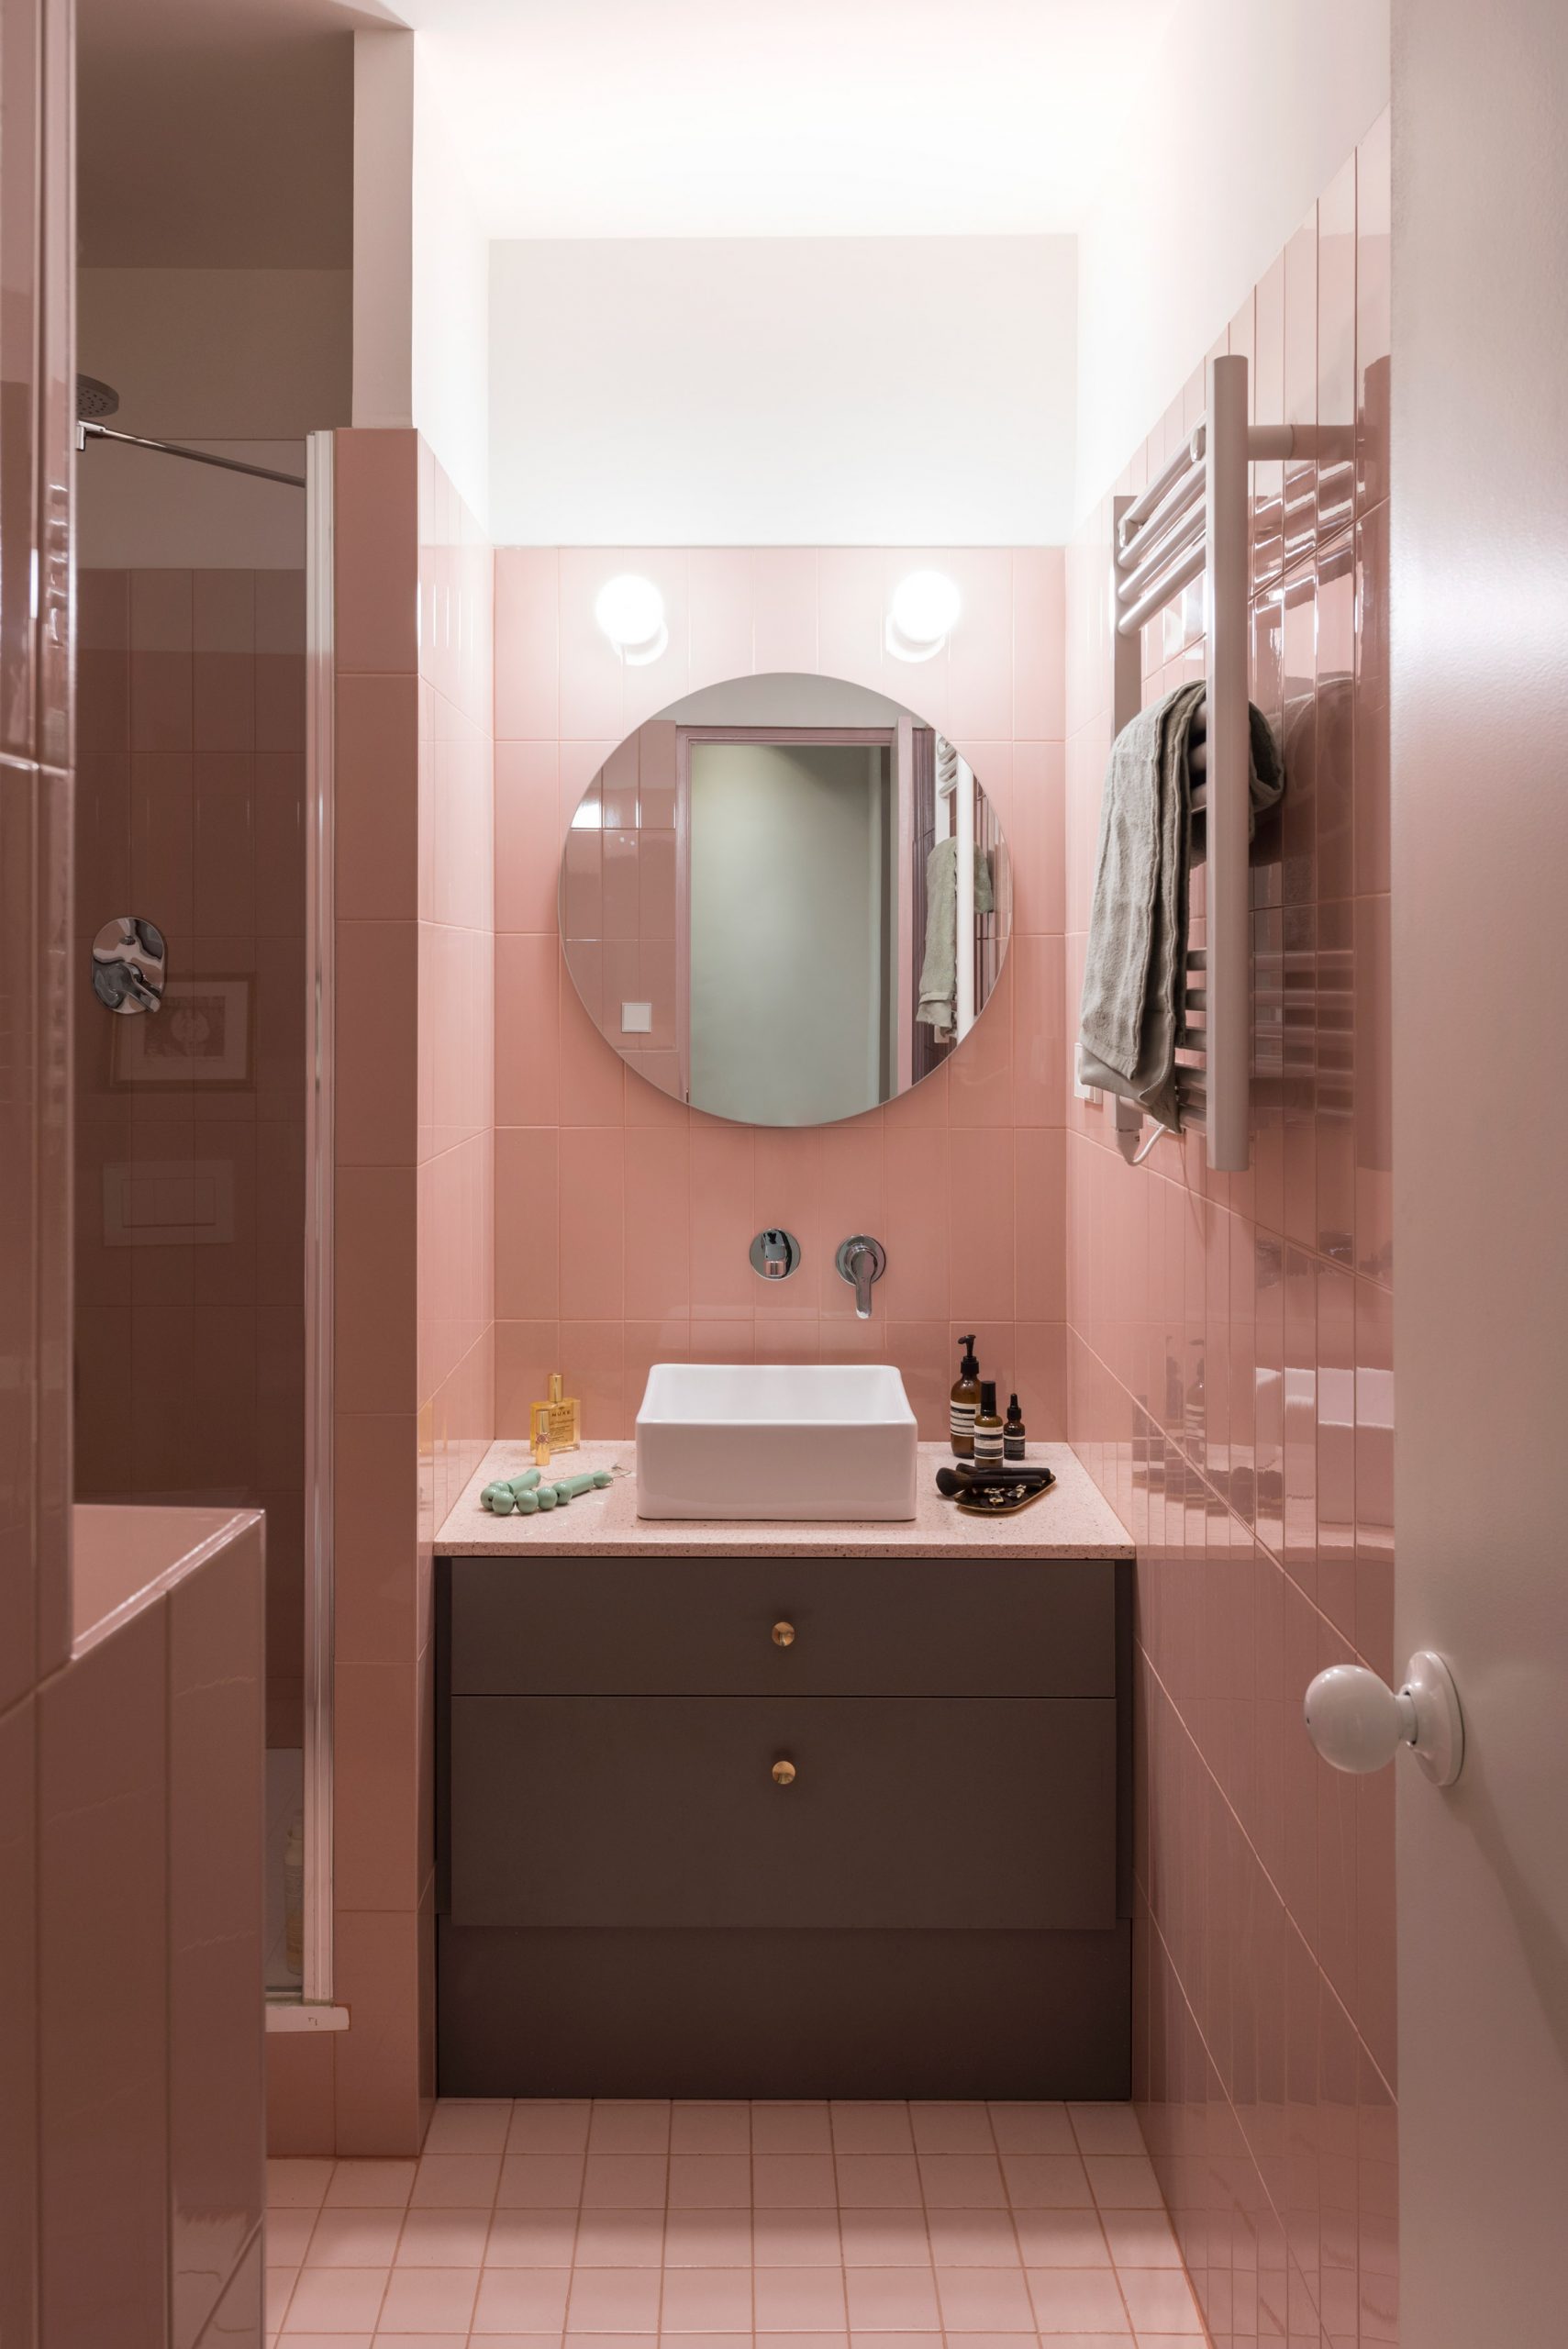 Blush-toned bathroom